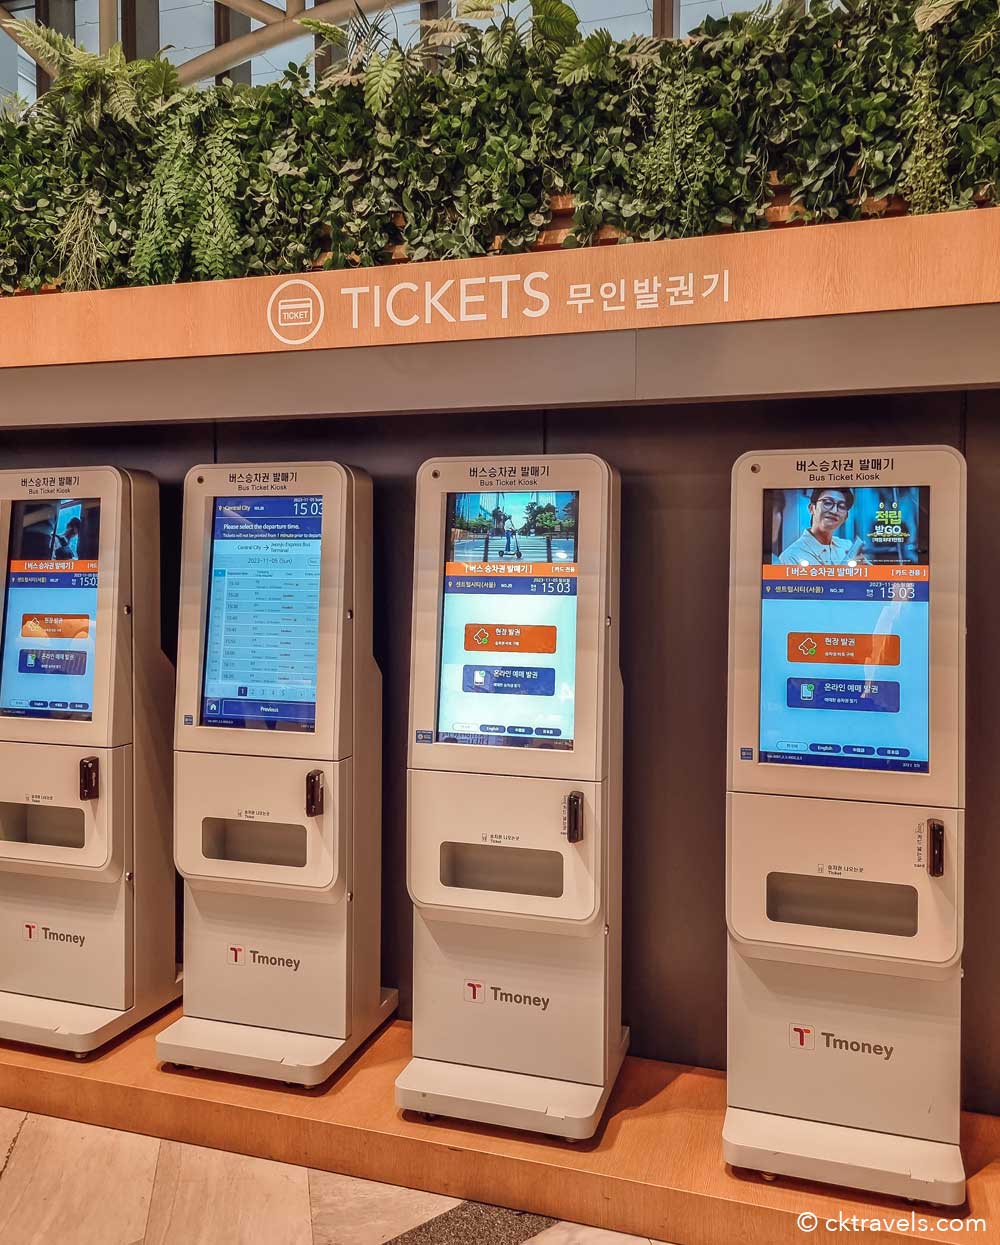 Seoul to Jeonju bus - ticket machine at Seoul express bus terminal